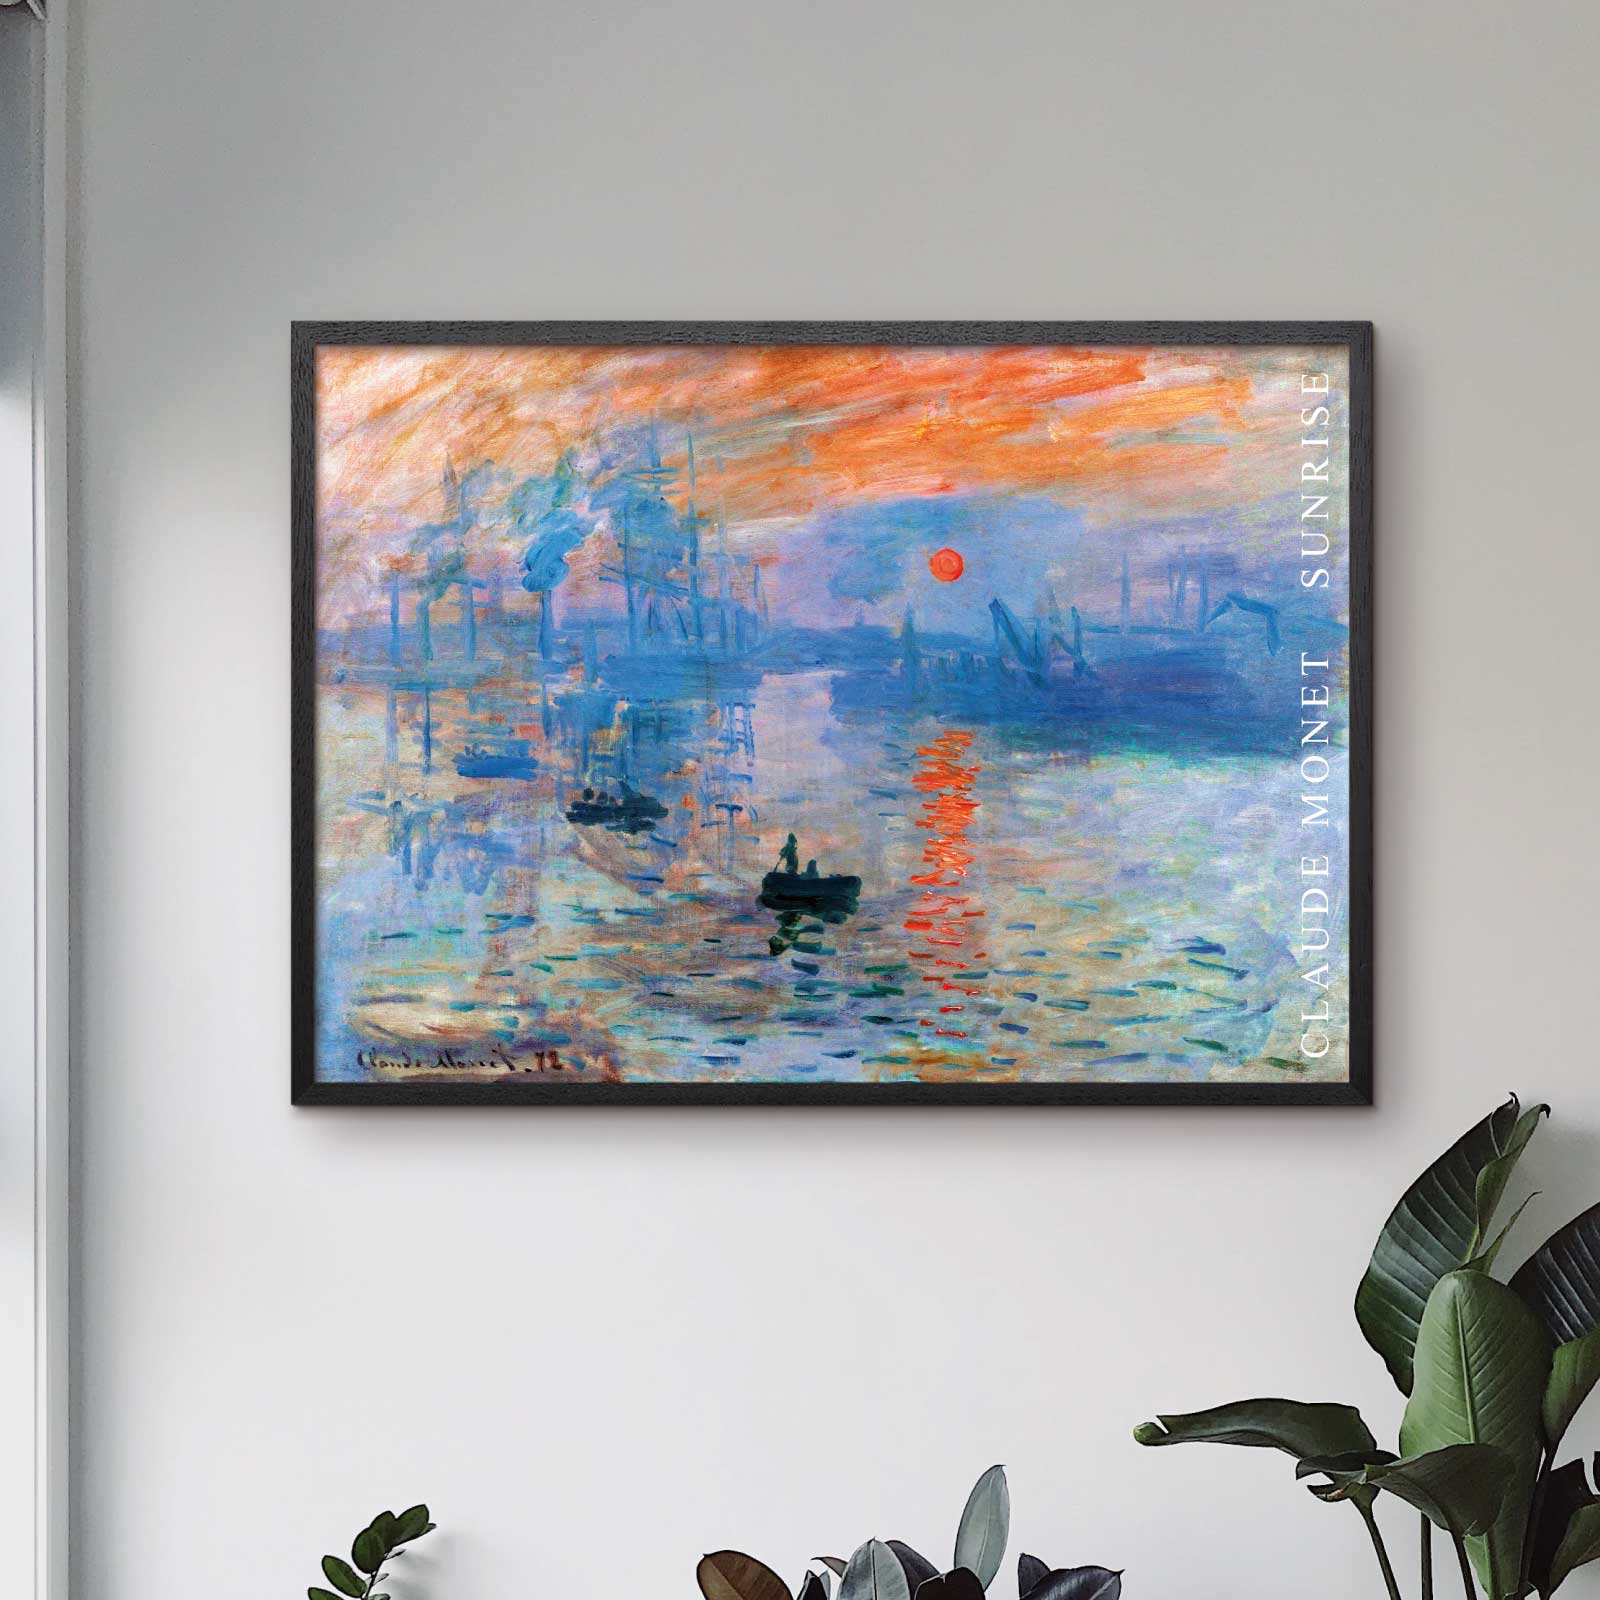 Art poster "Sunrise" by Claude Monet